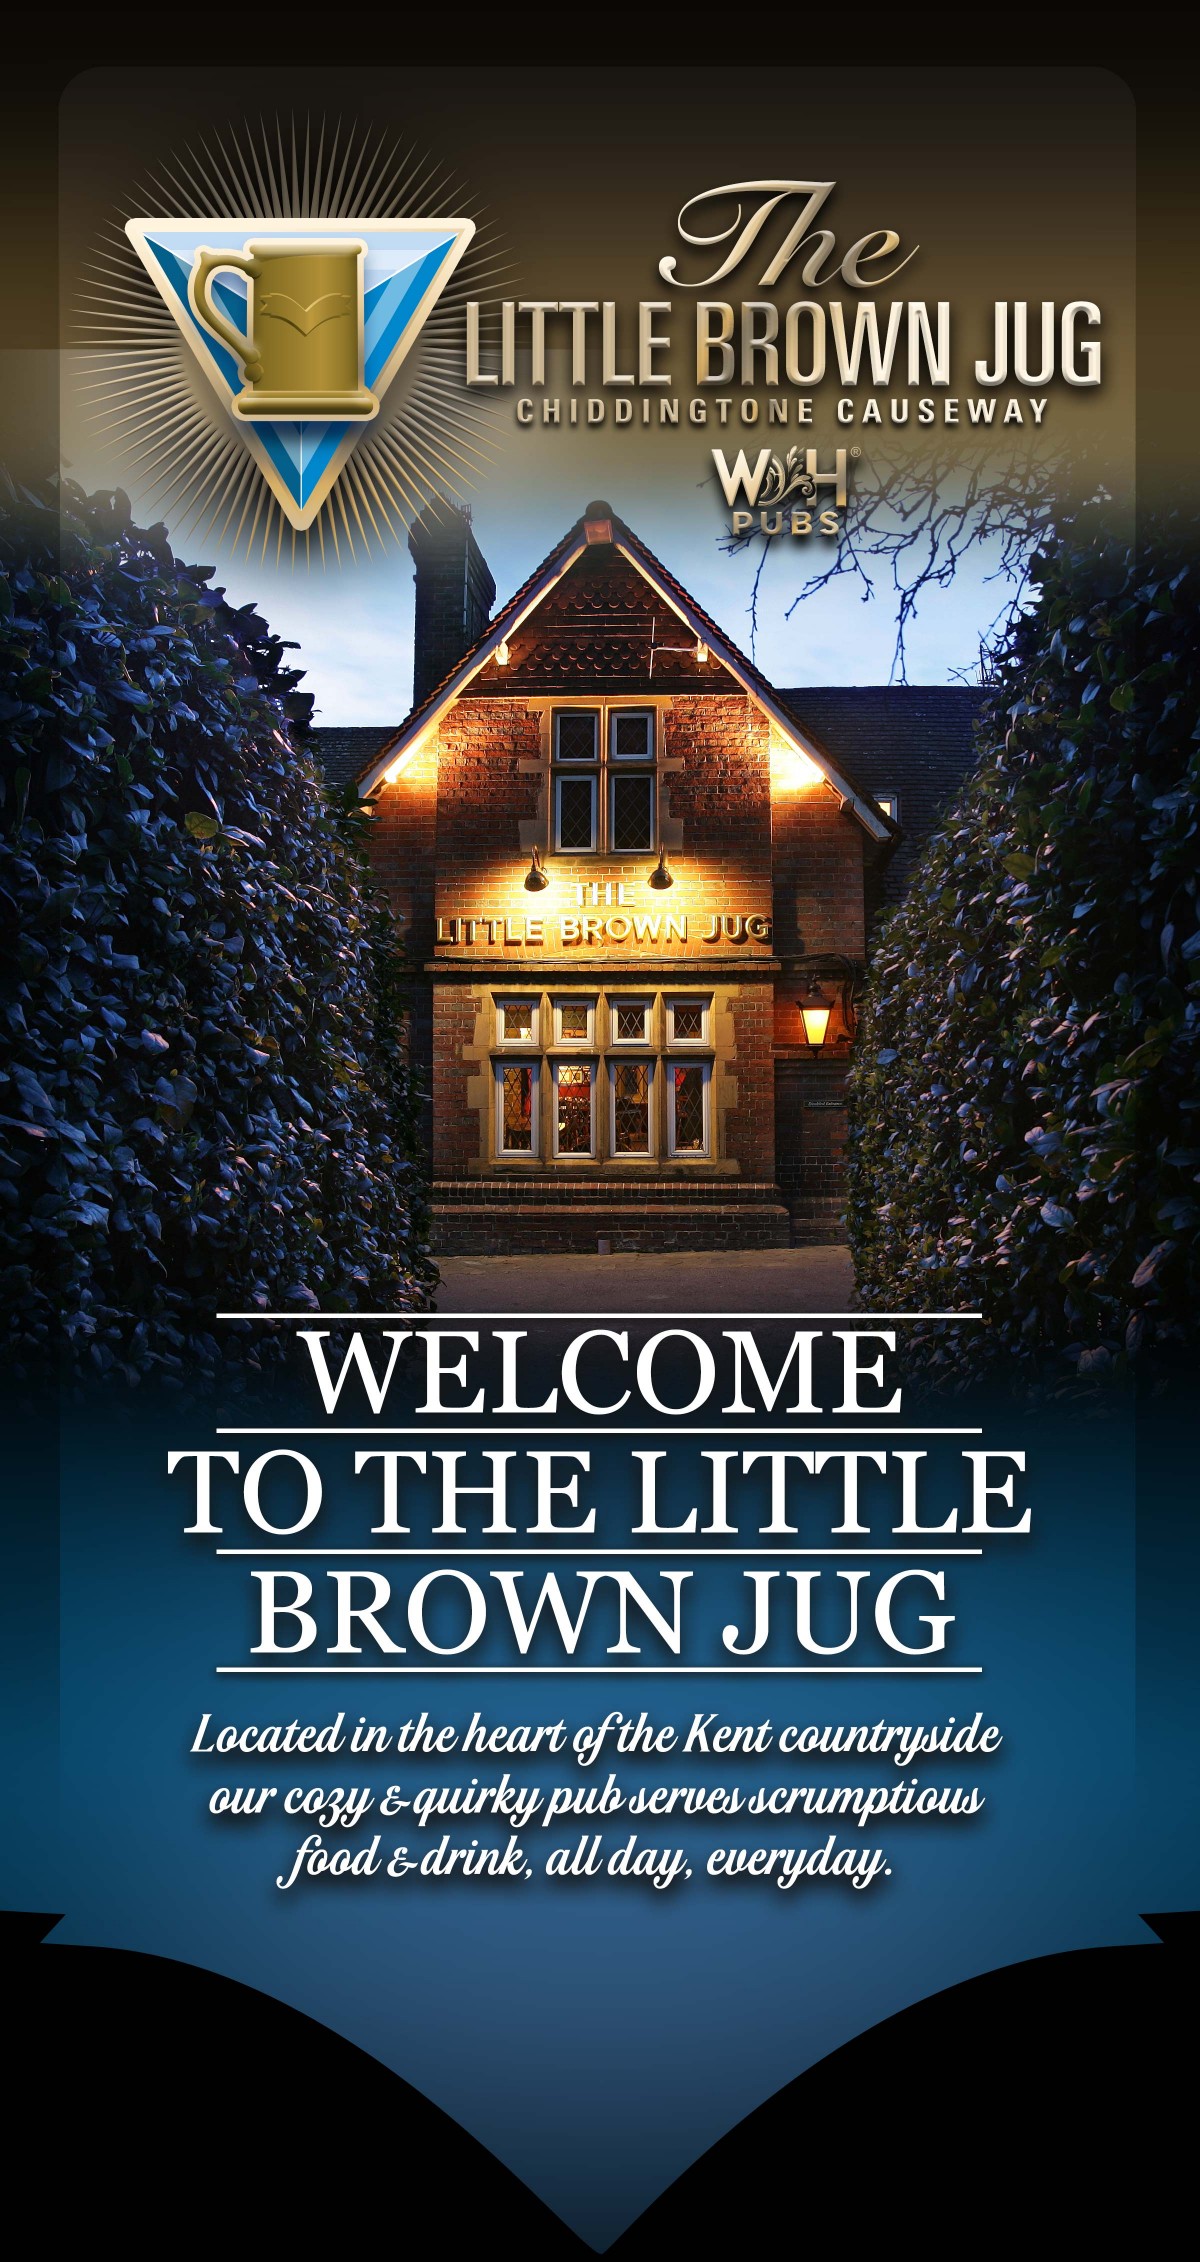 The Little Brown Jug Chiddingstone Causeway Little Brown Jug